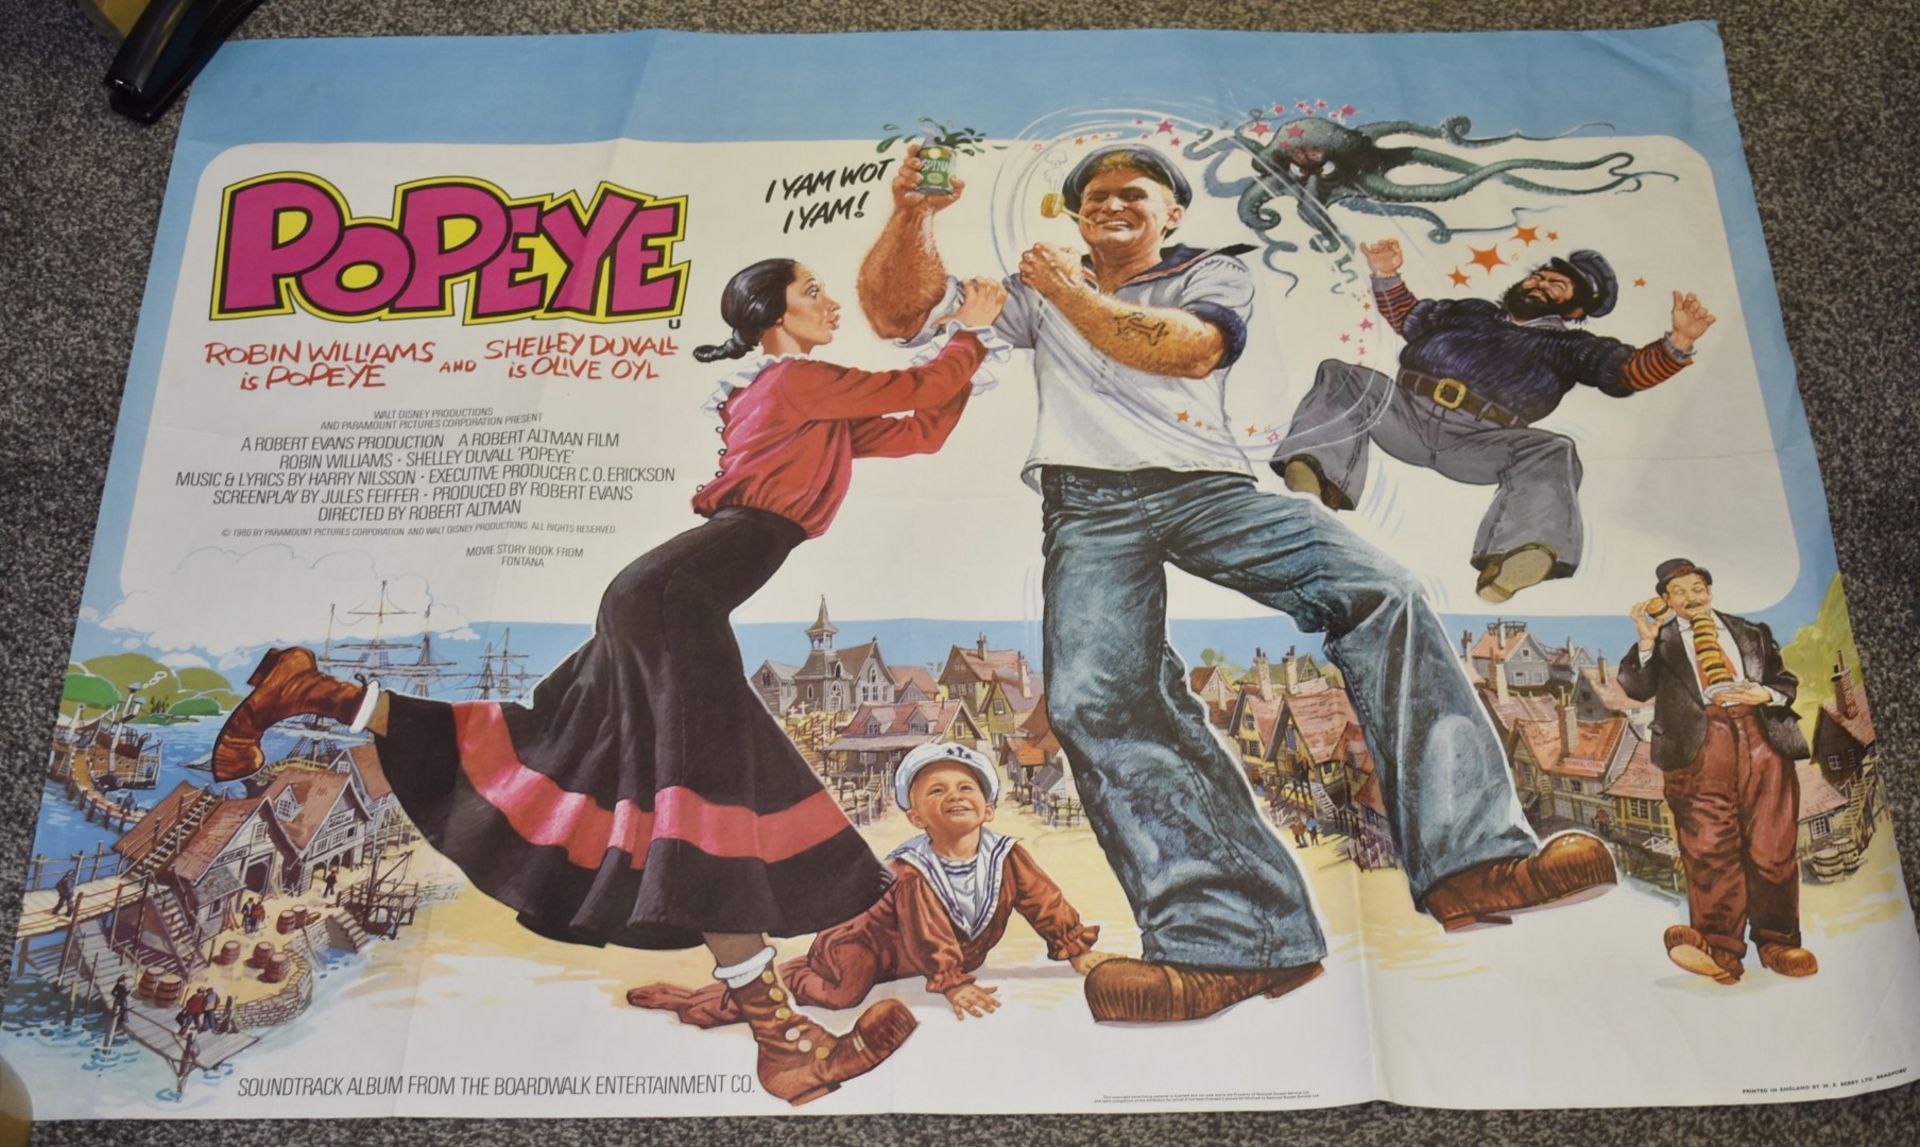 1 x Quad Movie Poster - POPEYE - Starring Robin Williams and Shelley Duvall - 1980 Film - Walt